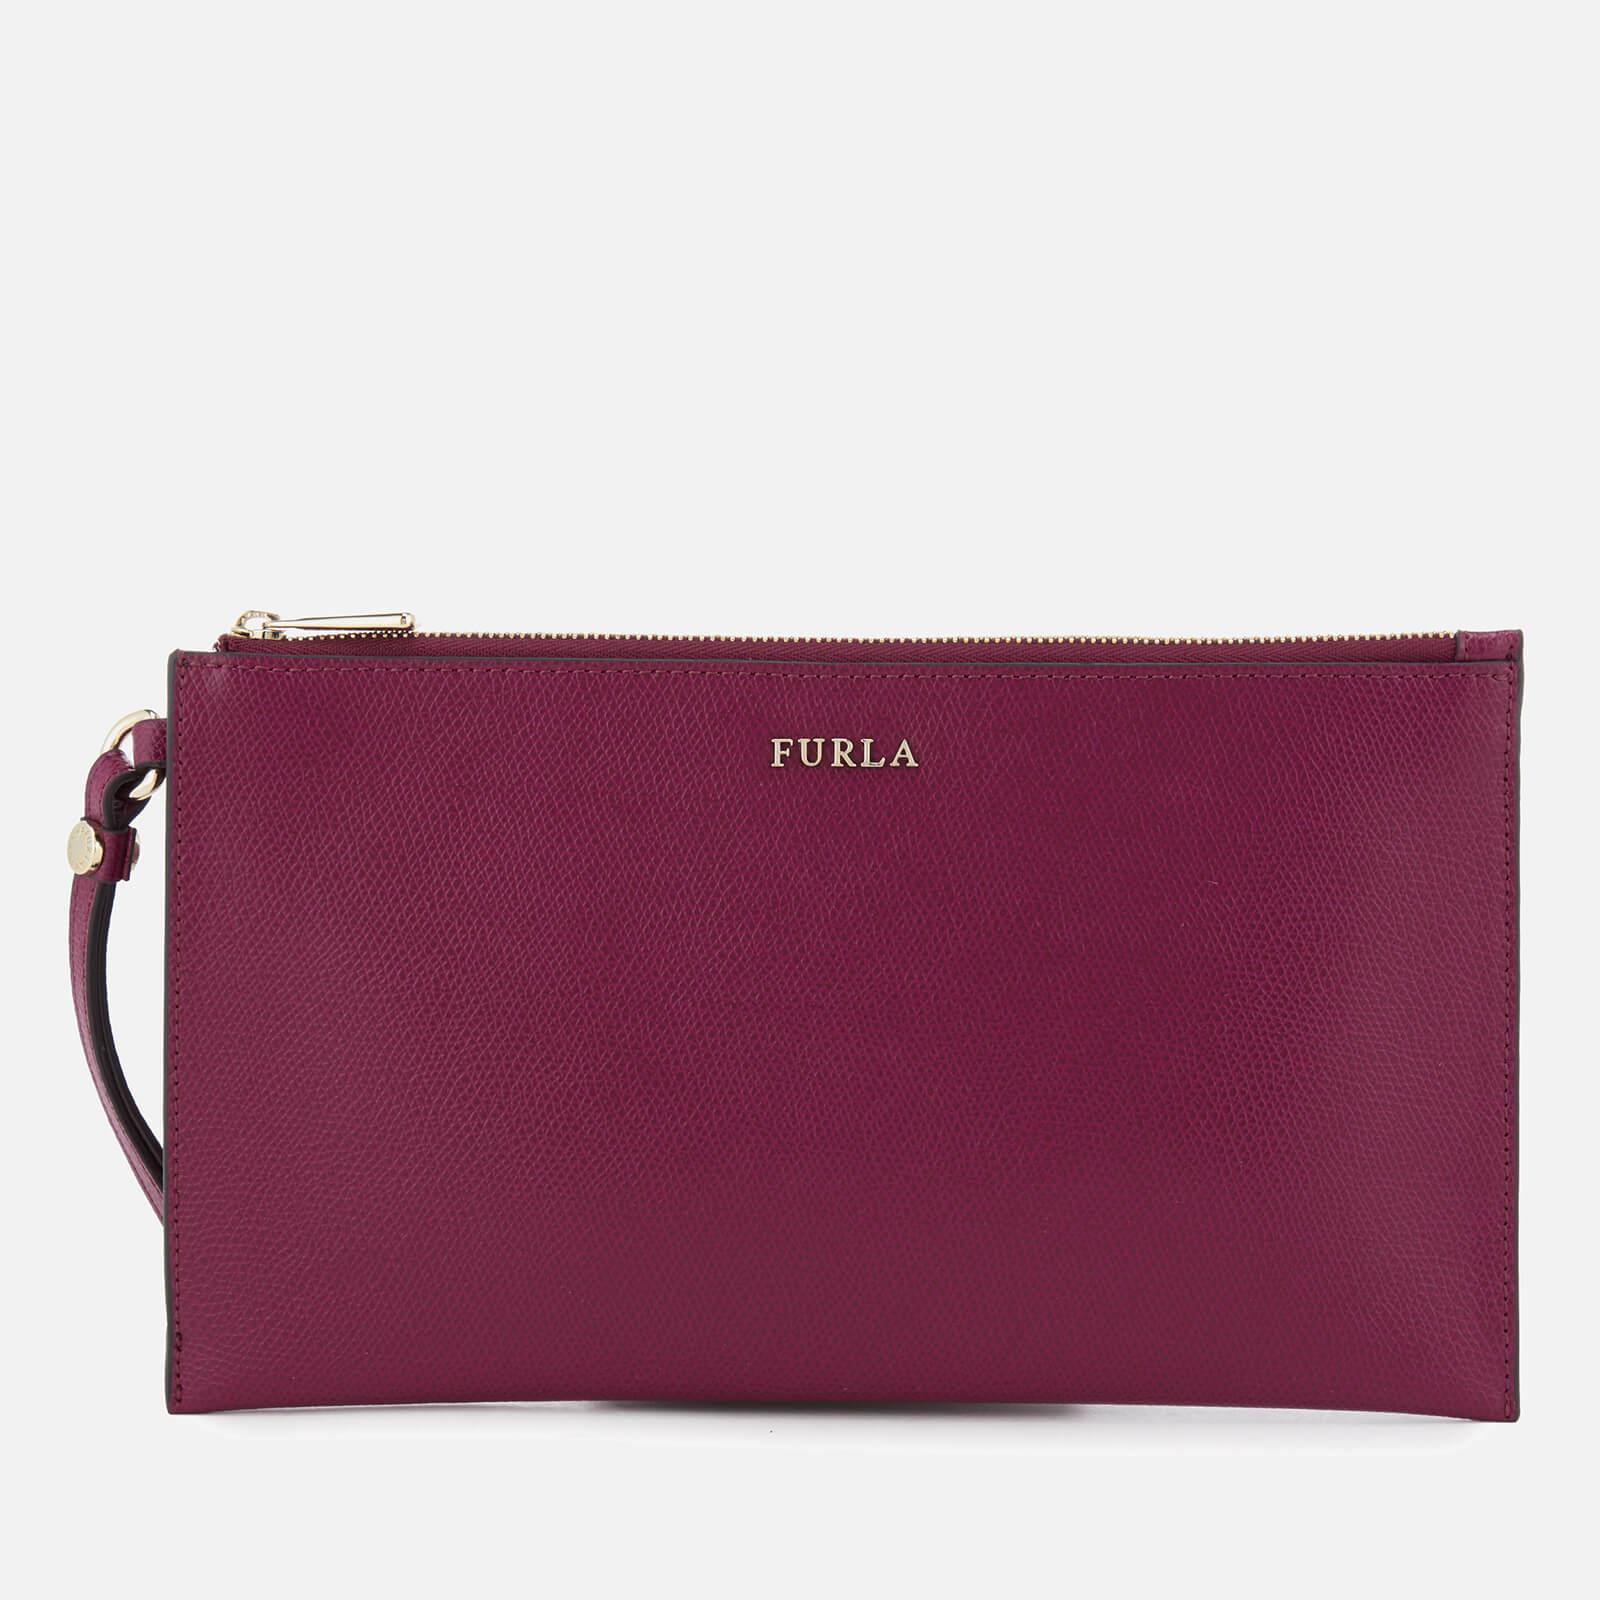 Furla Leather Babylon Xl Envelope Clutch Bag in Purple - Lyst